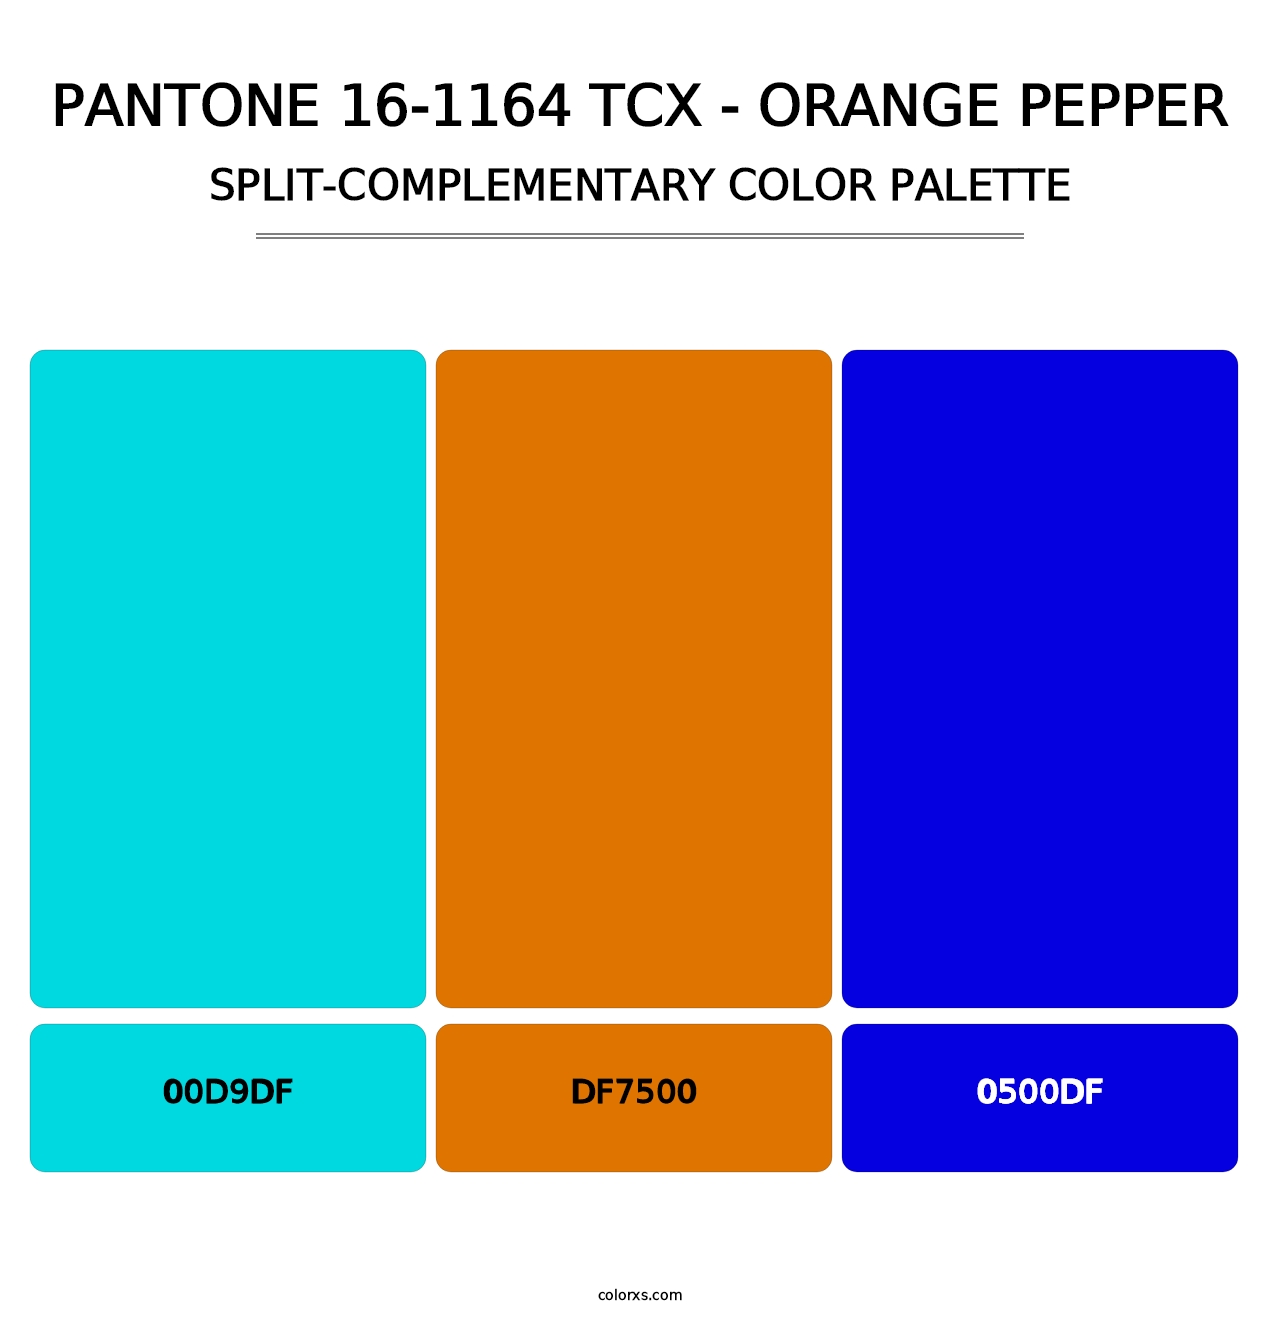 PANTONE 16-1164 TCX - Orange Pepper - Split-Complementary Color Palette